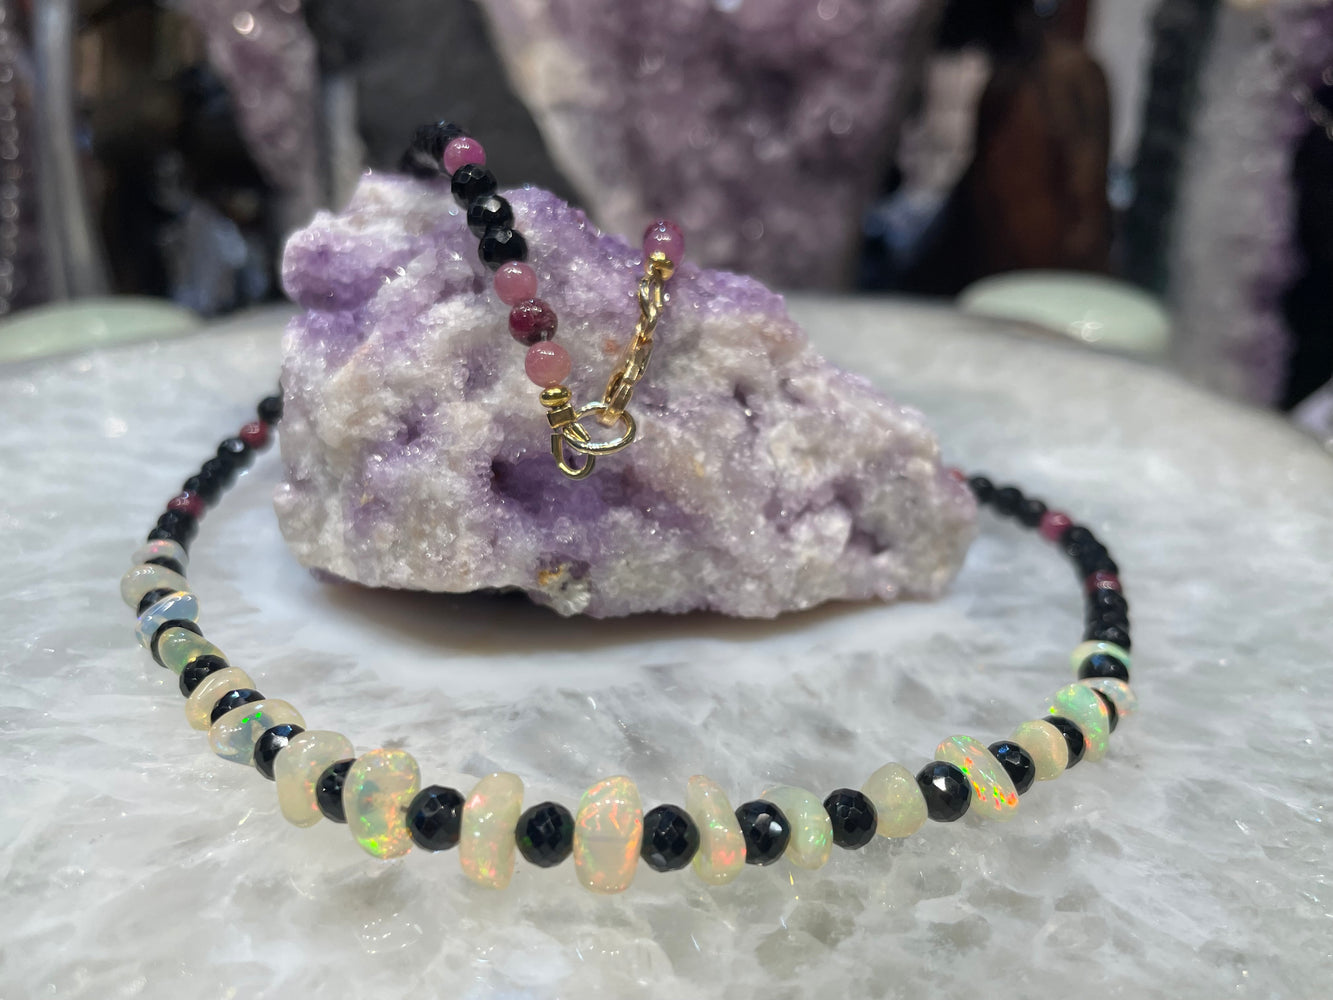 Stunning opal ruby & black spinel gemstone necklace